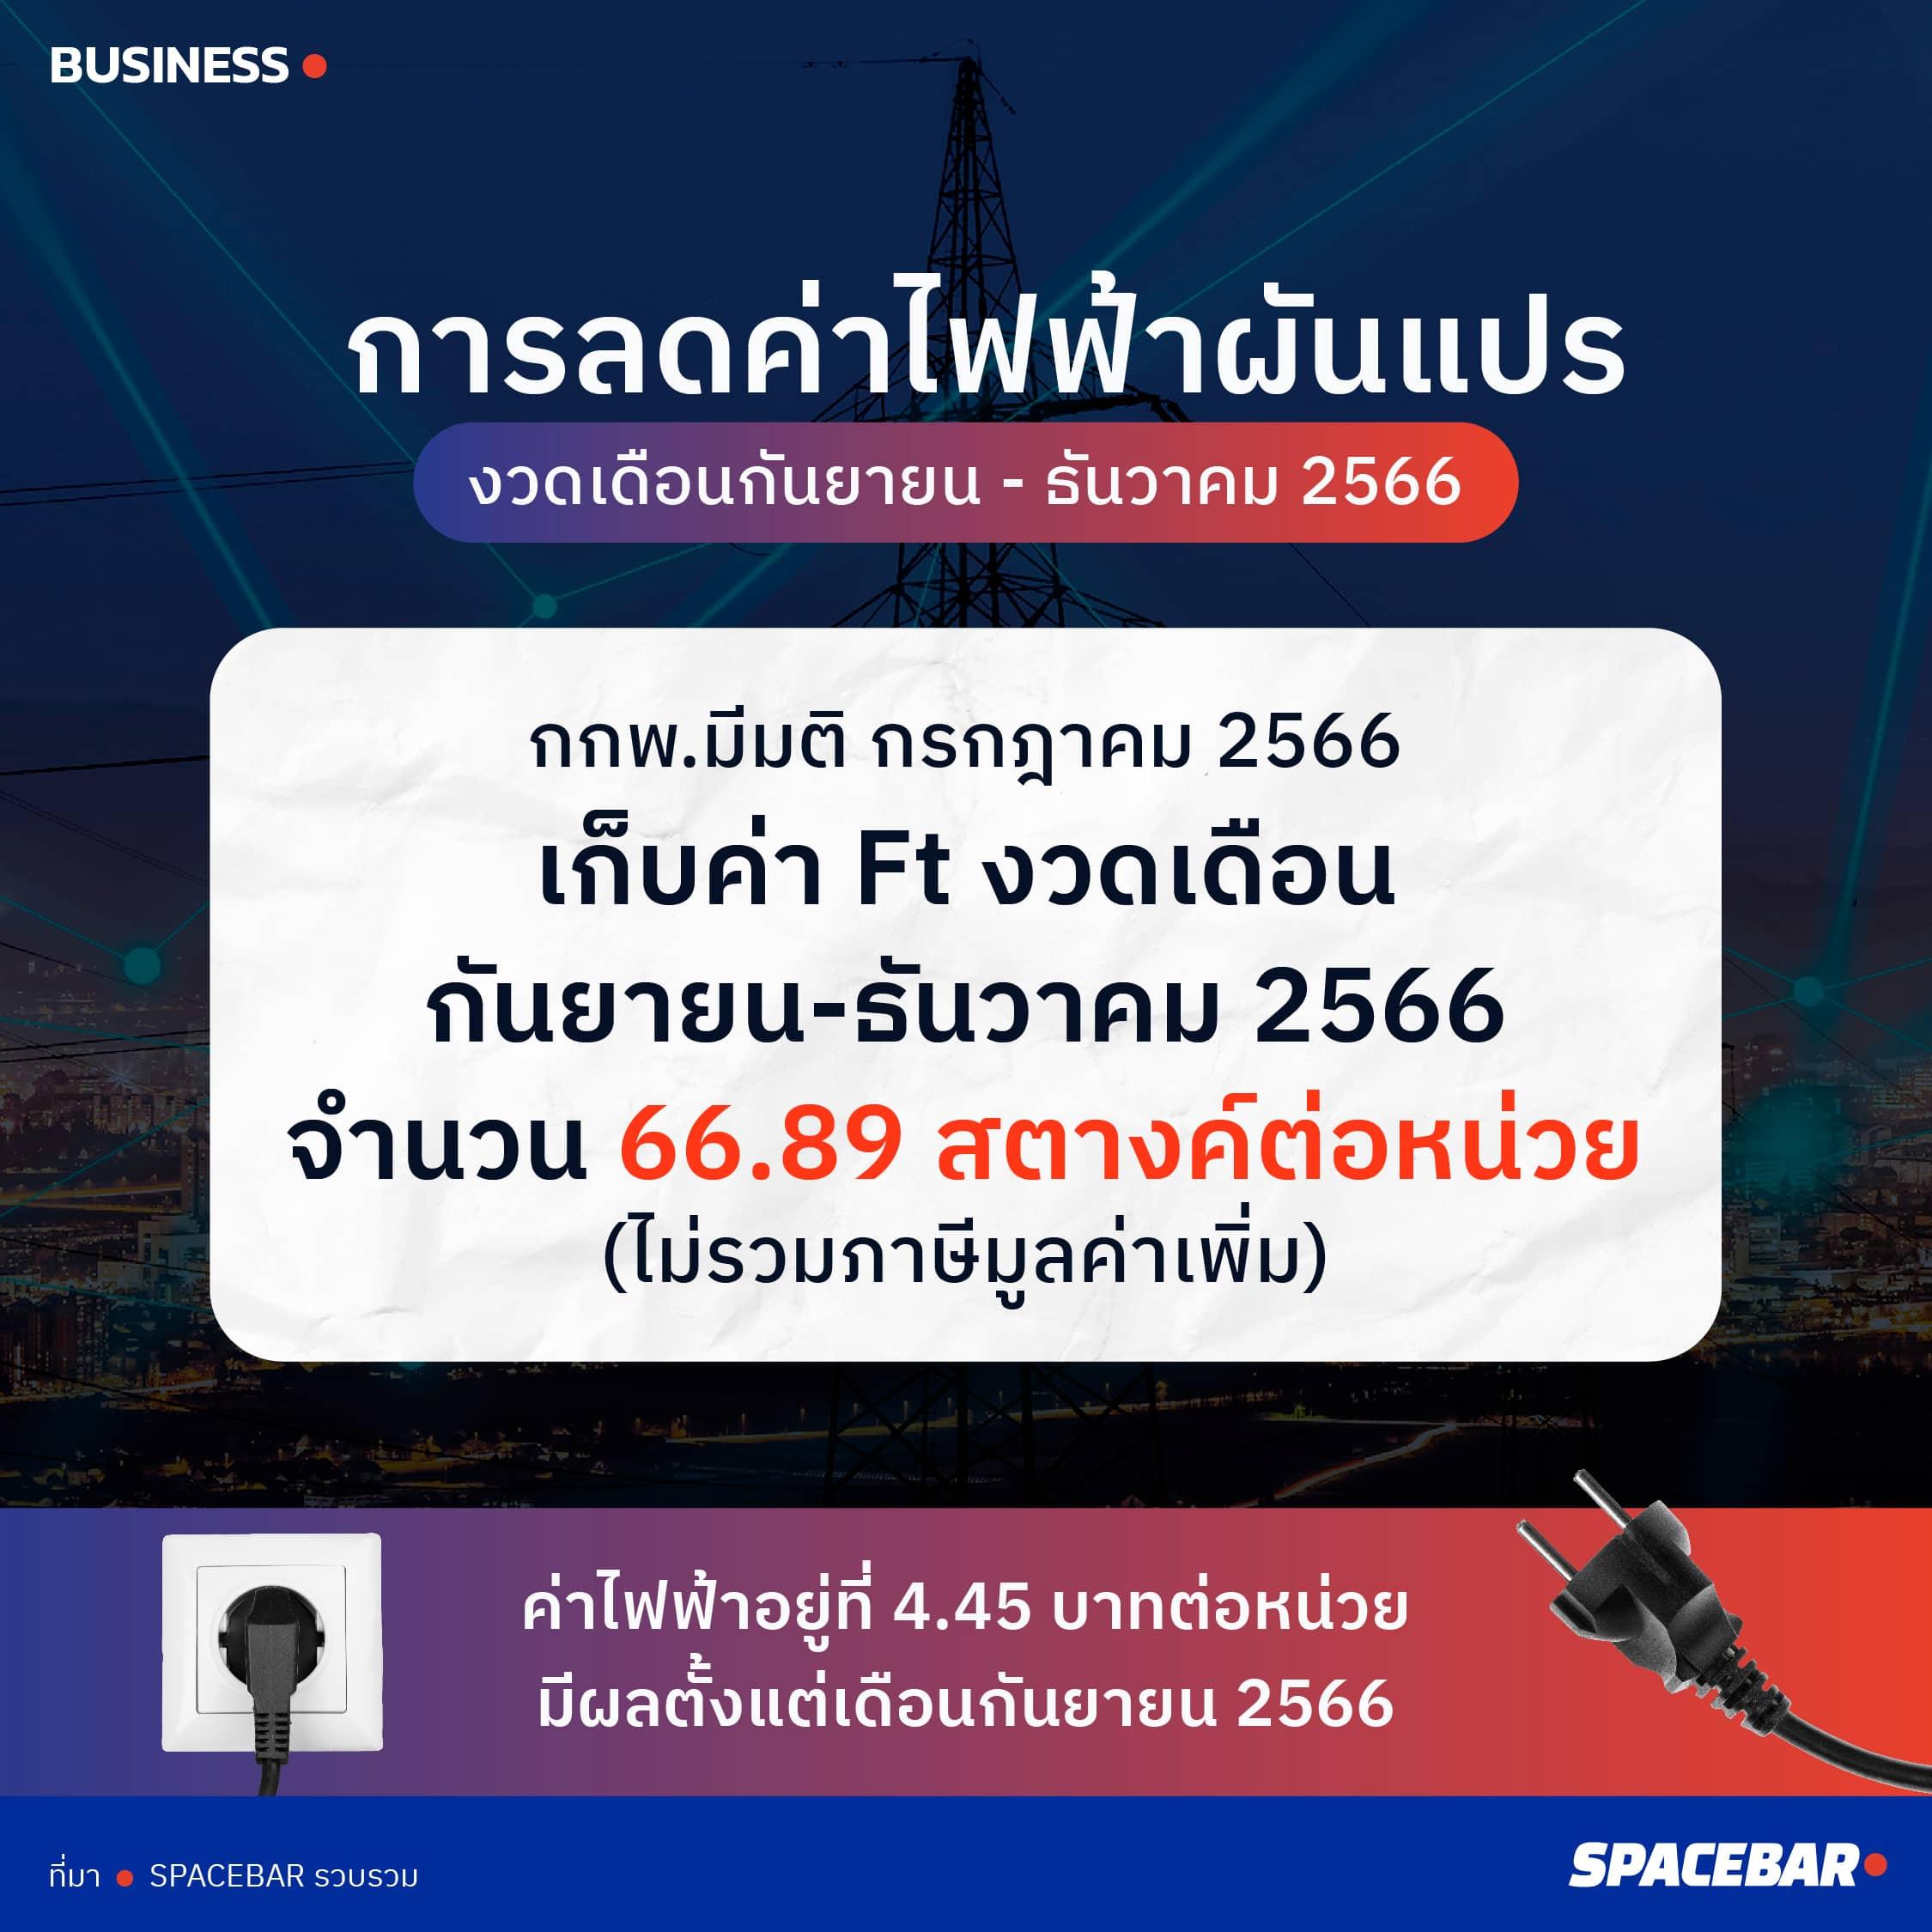 https://images.ctfassets.net/i3o8p9lzd06f/4zy02q3C8aRy7XliFSujta/d479cd882d605590f78d1f5e7d8abc69/info_Economy-Electrical-Electricity-Bills-Meter-Thailand__1_